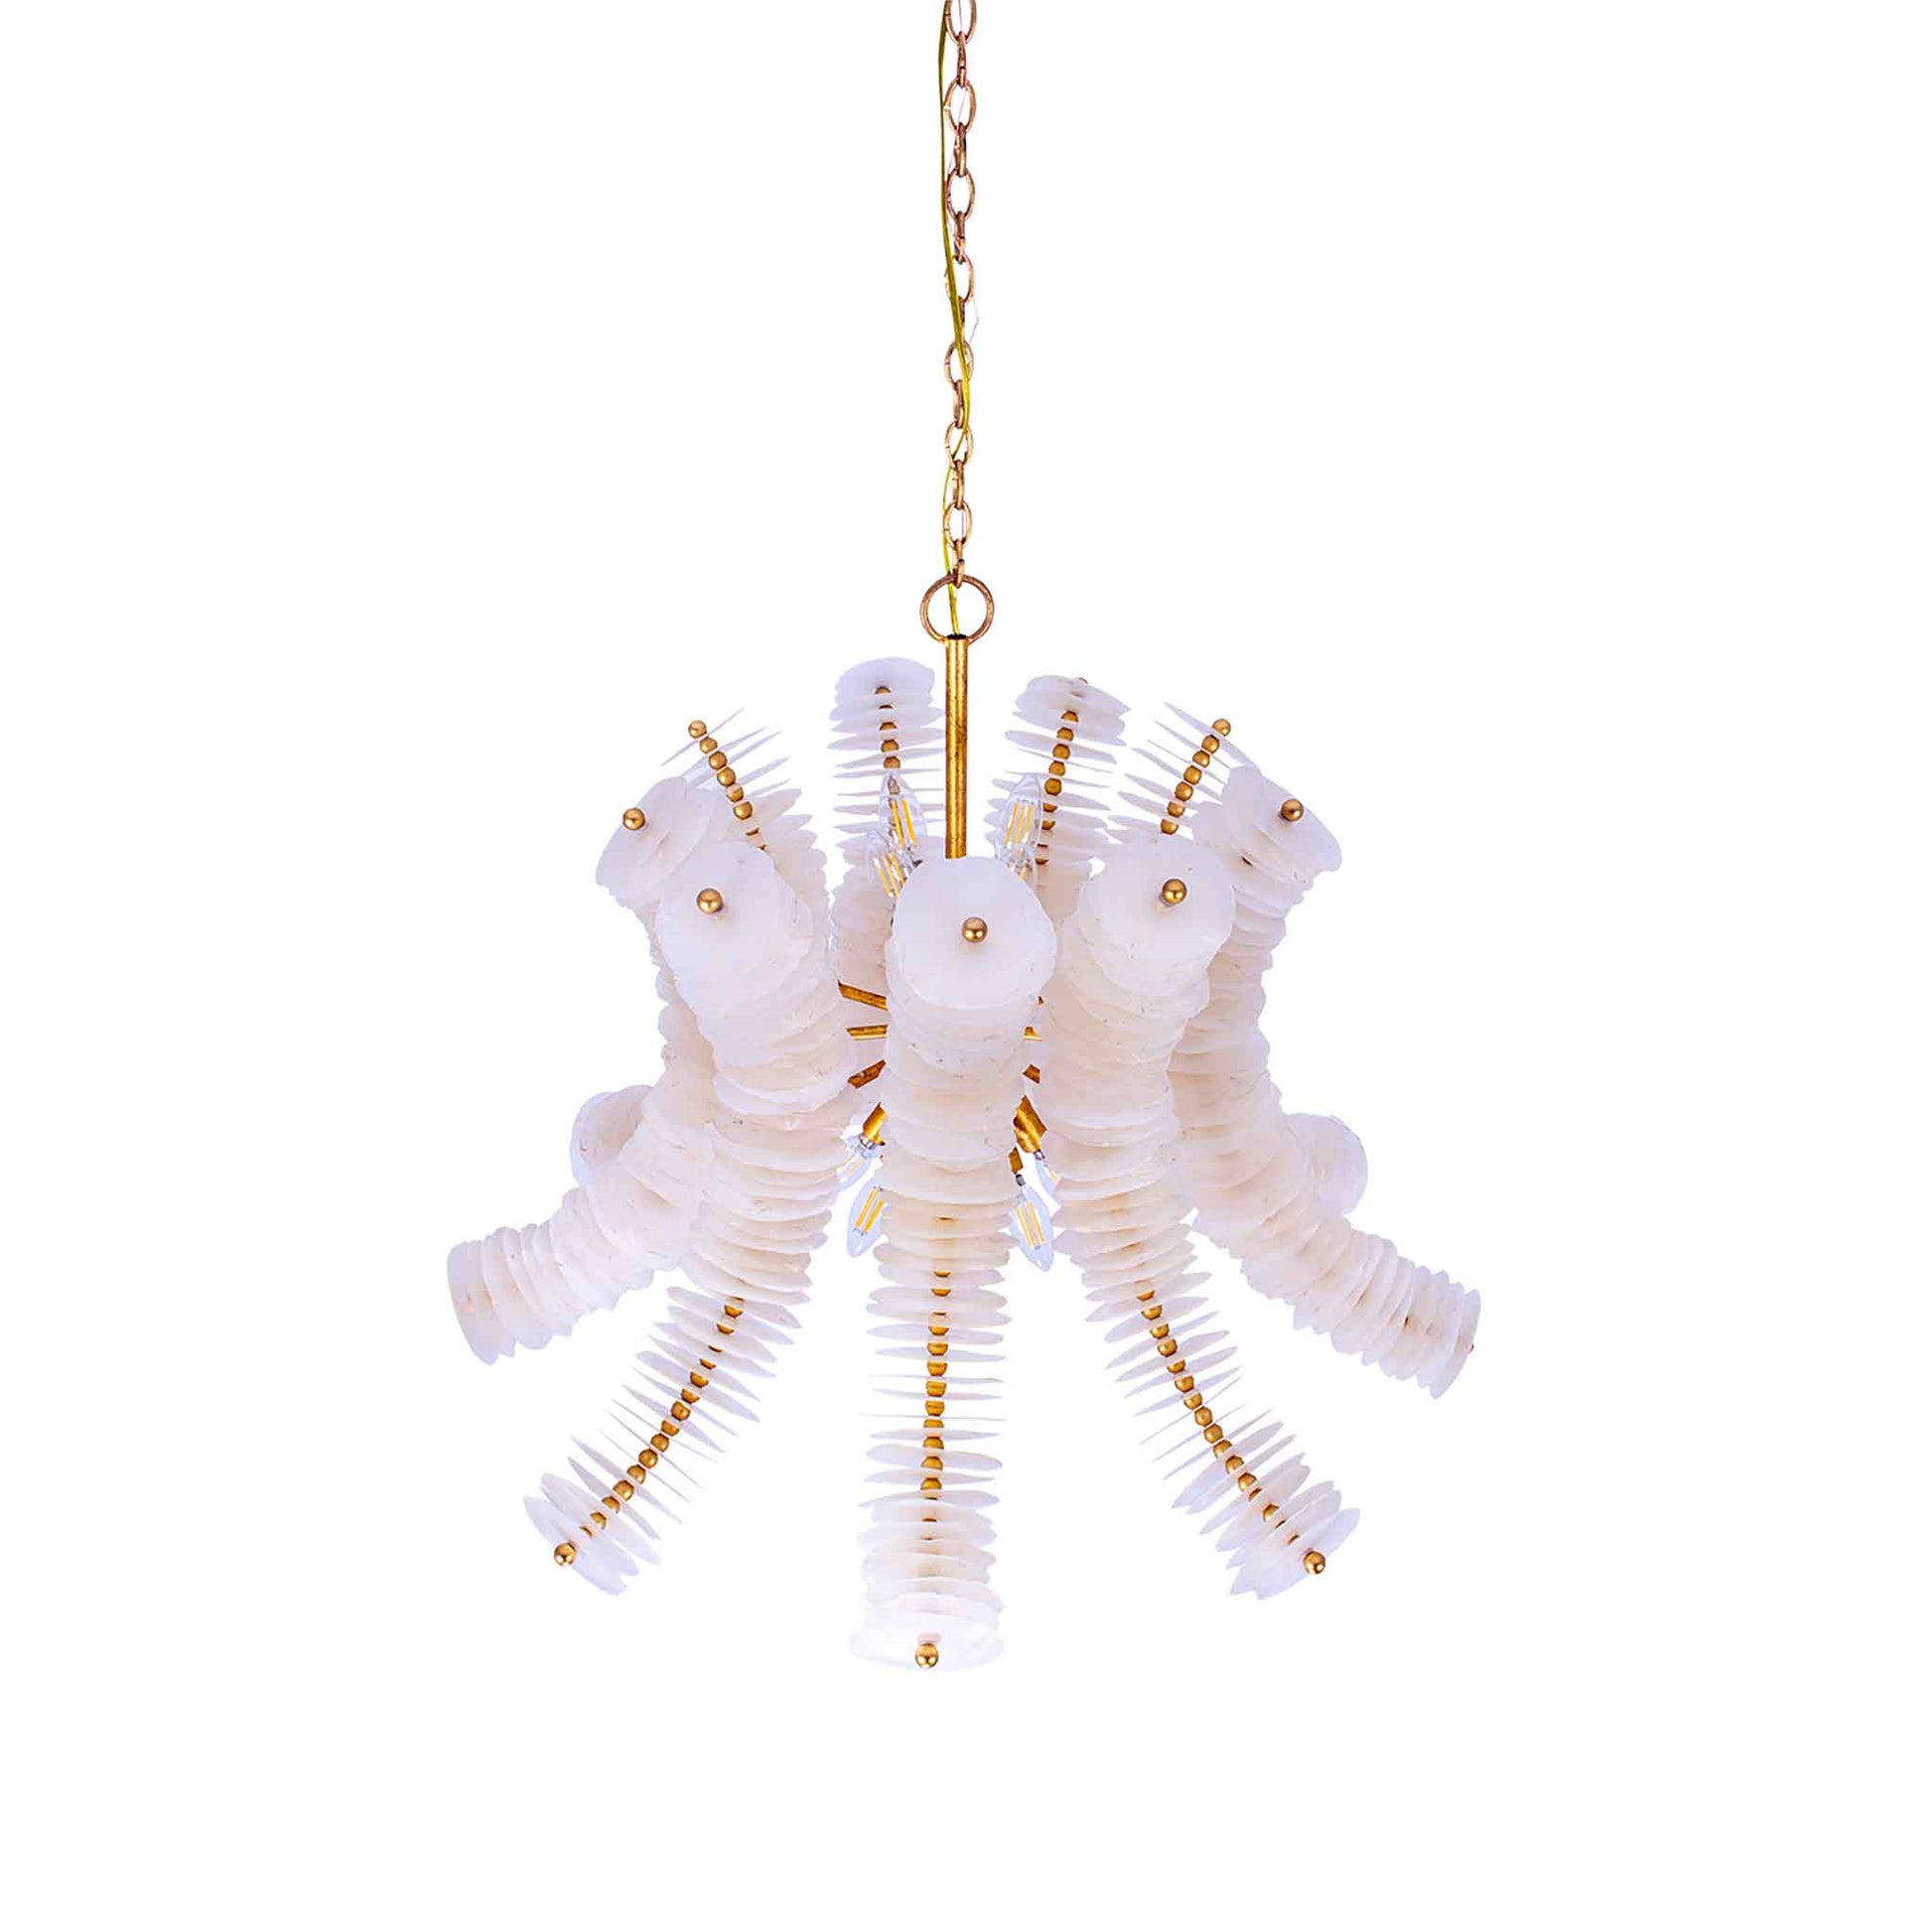 12 light 32 inch oxidized gold leaf pendant